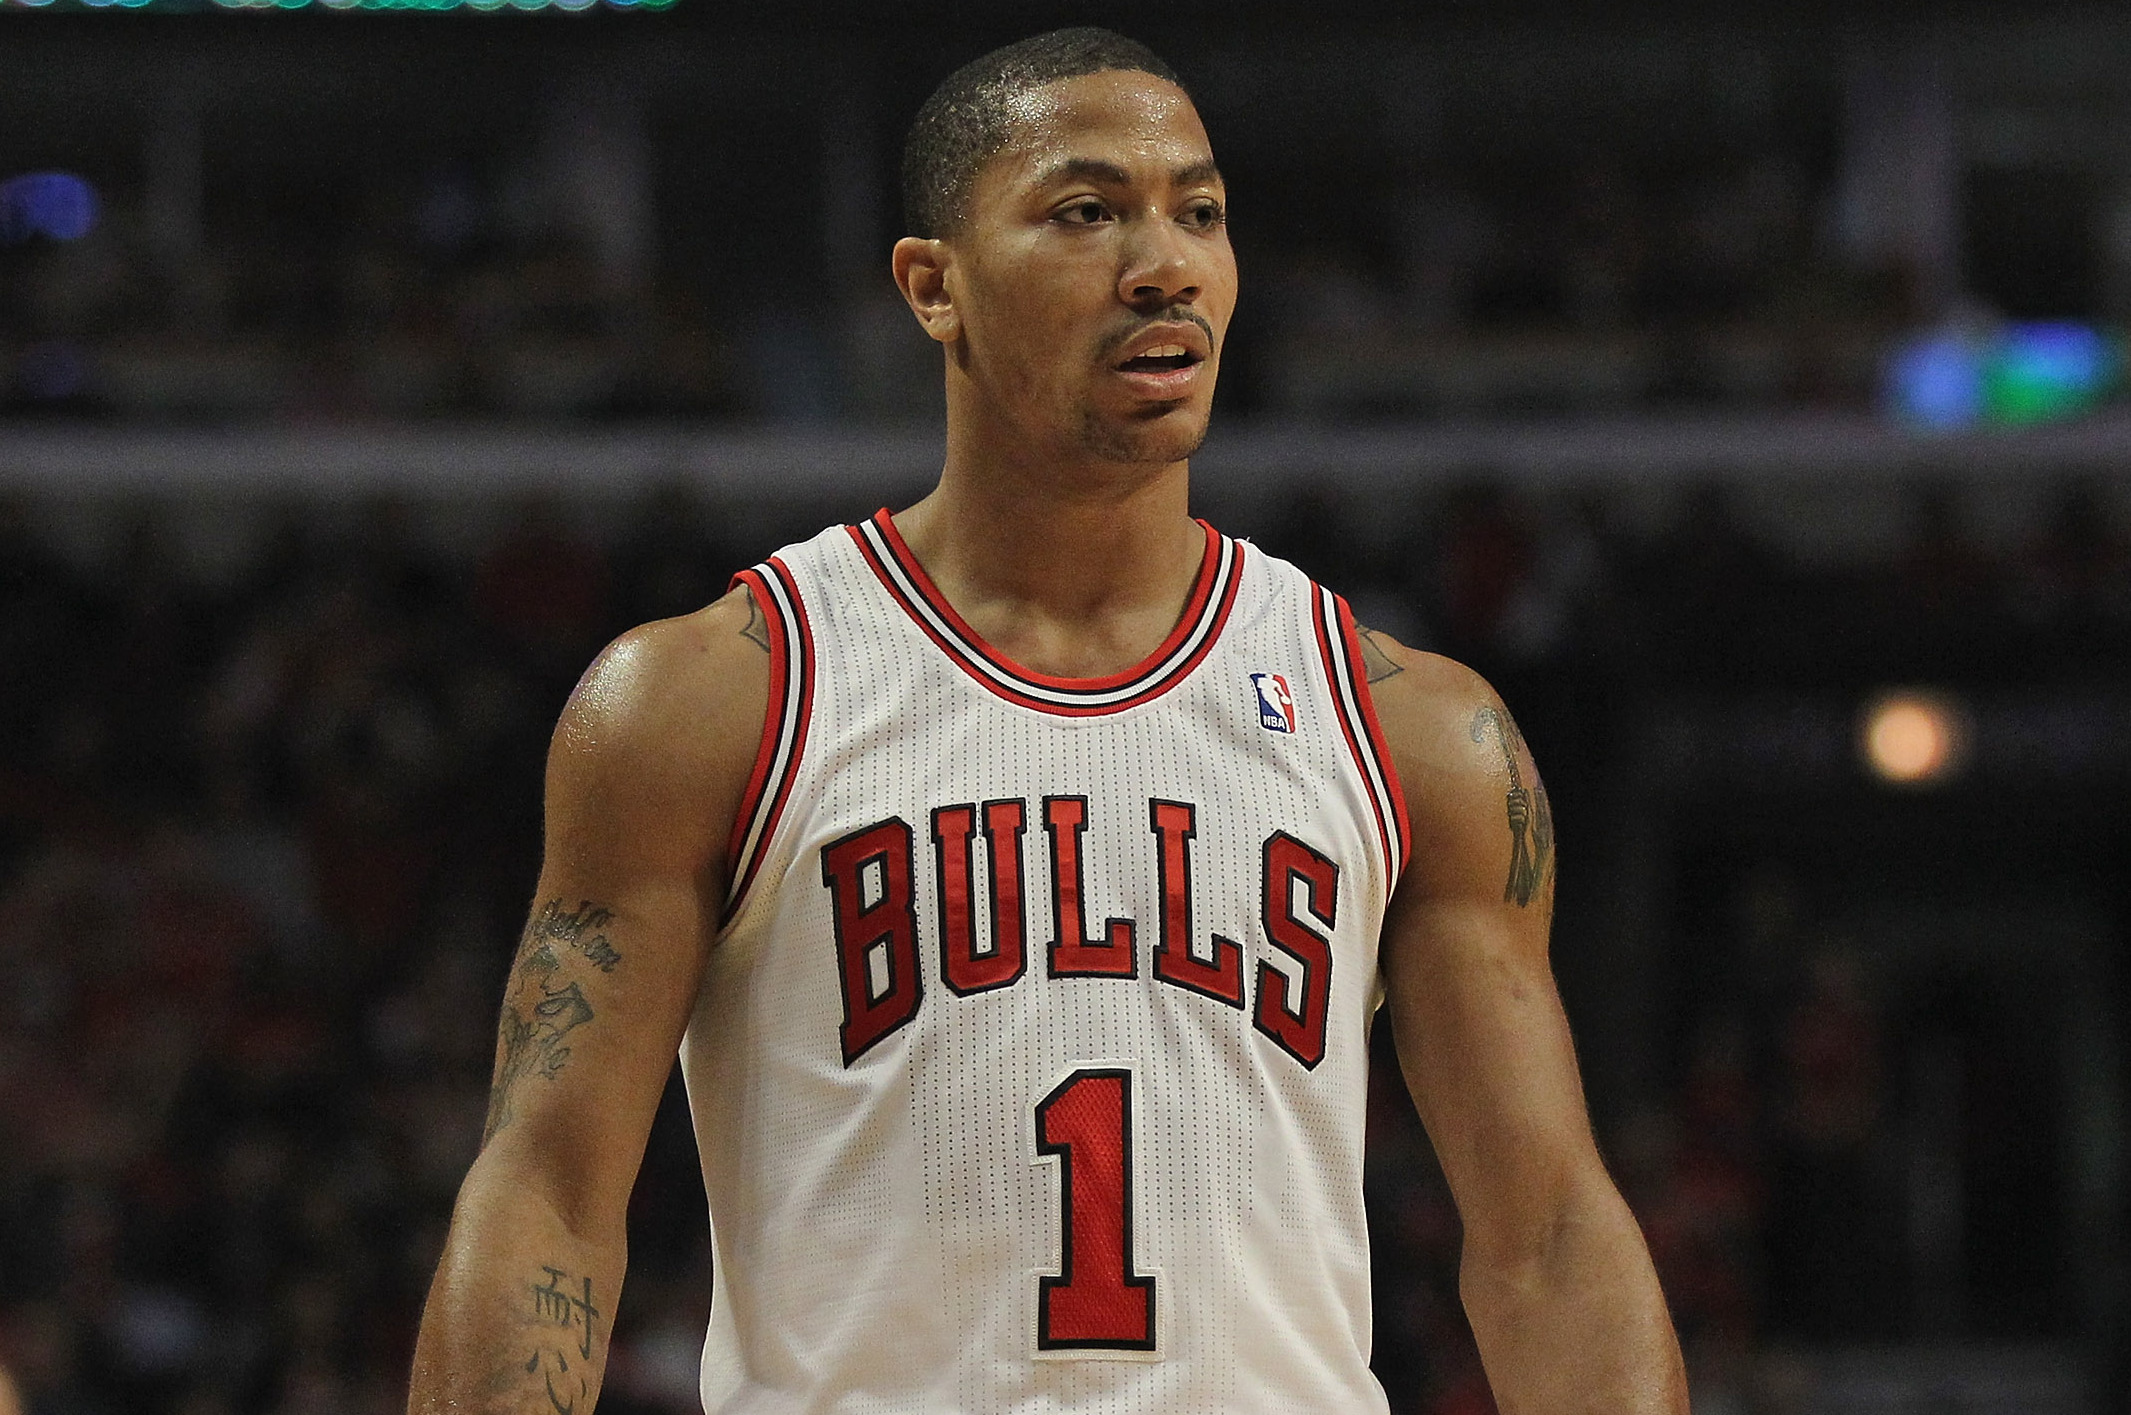 Bulls' Derrick Rose faces knee surgery again - Los Angeles Times